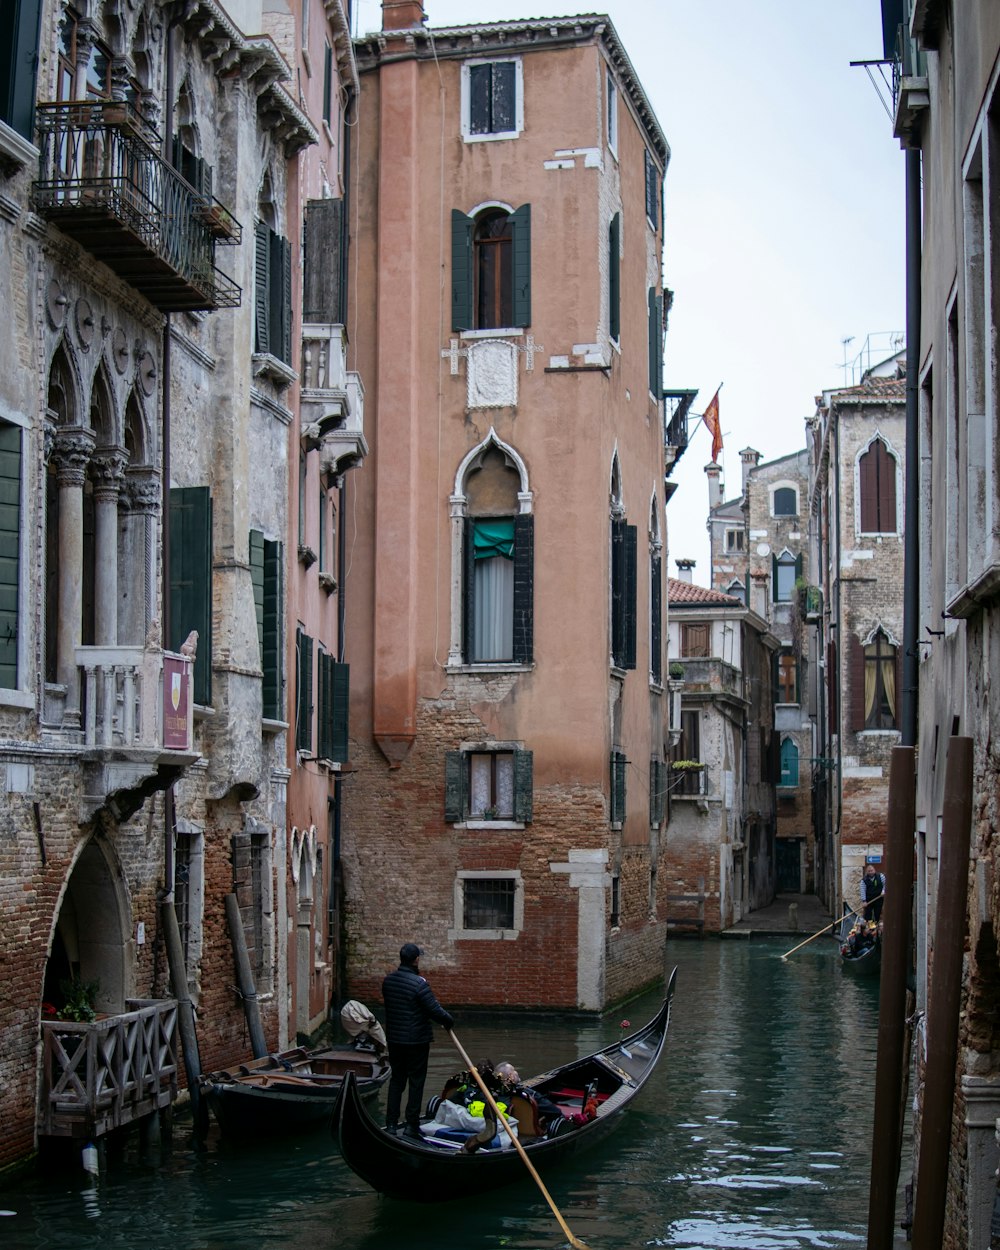 a gondola in a canal in venice